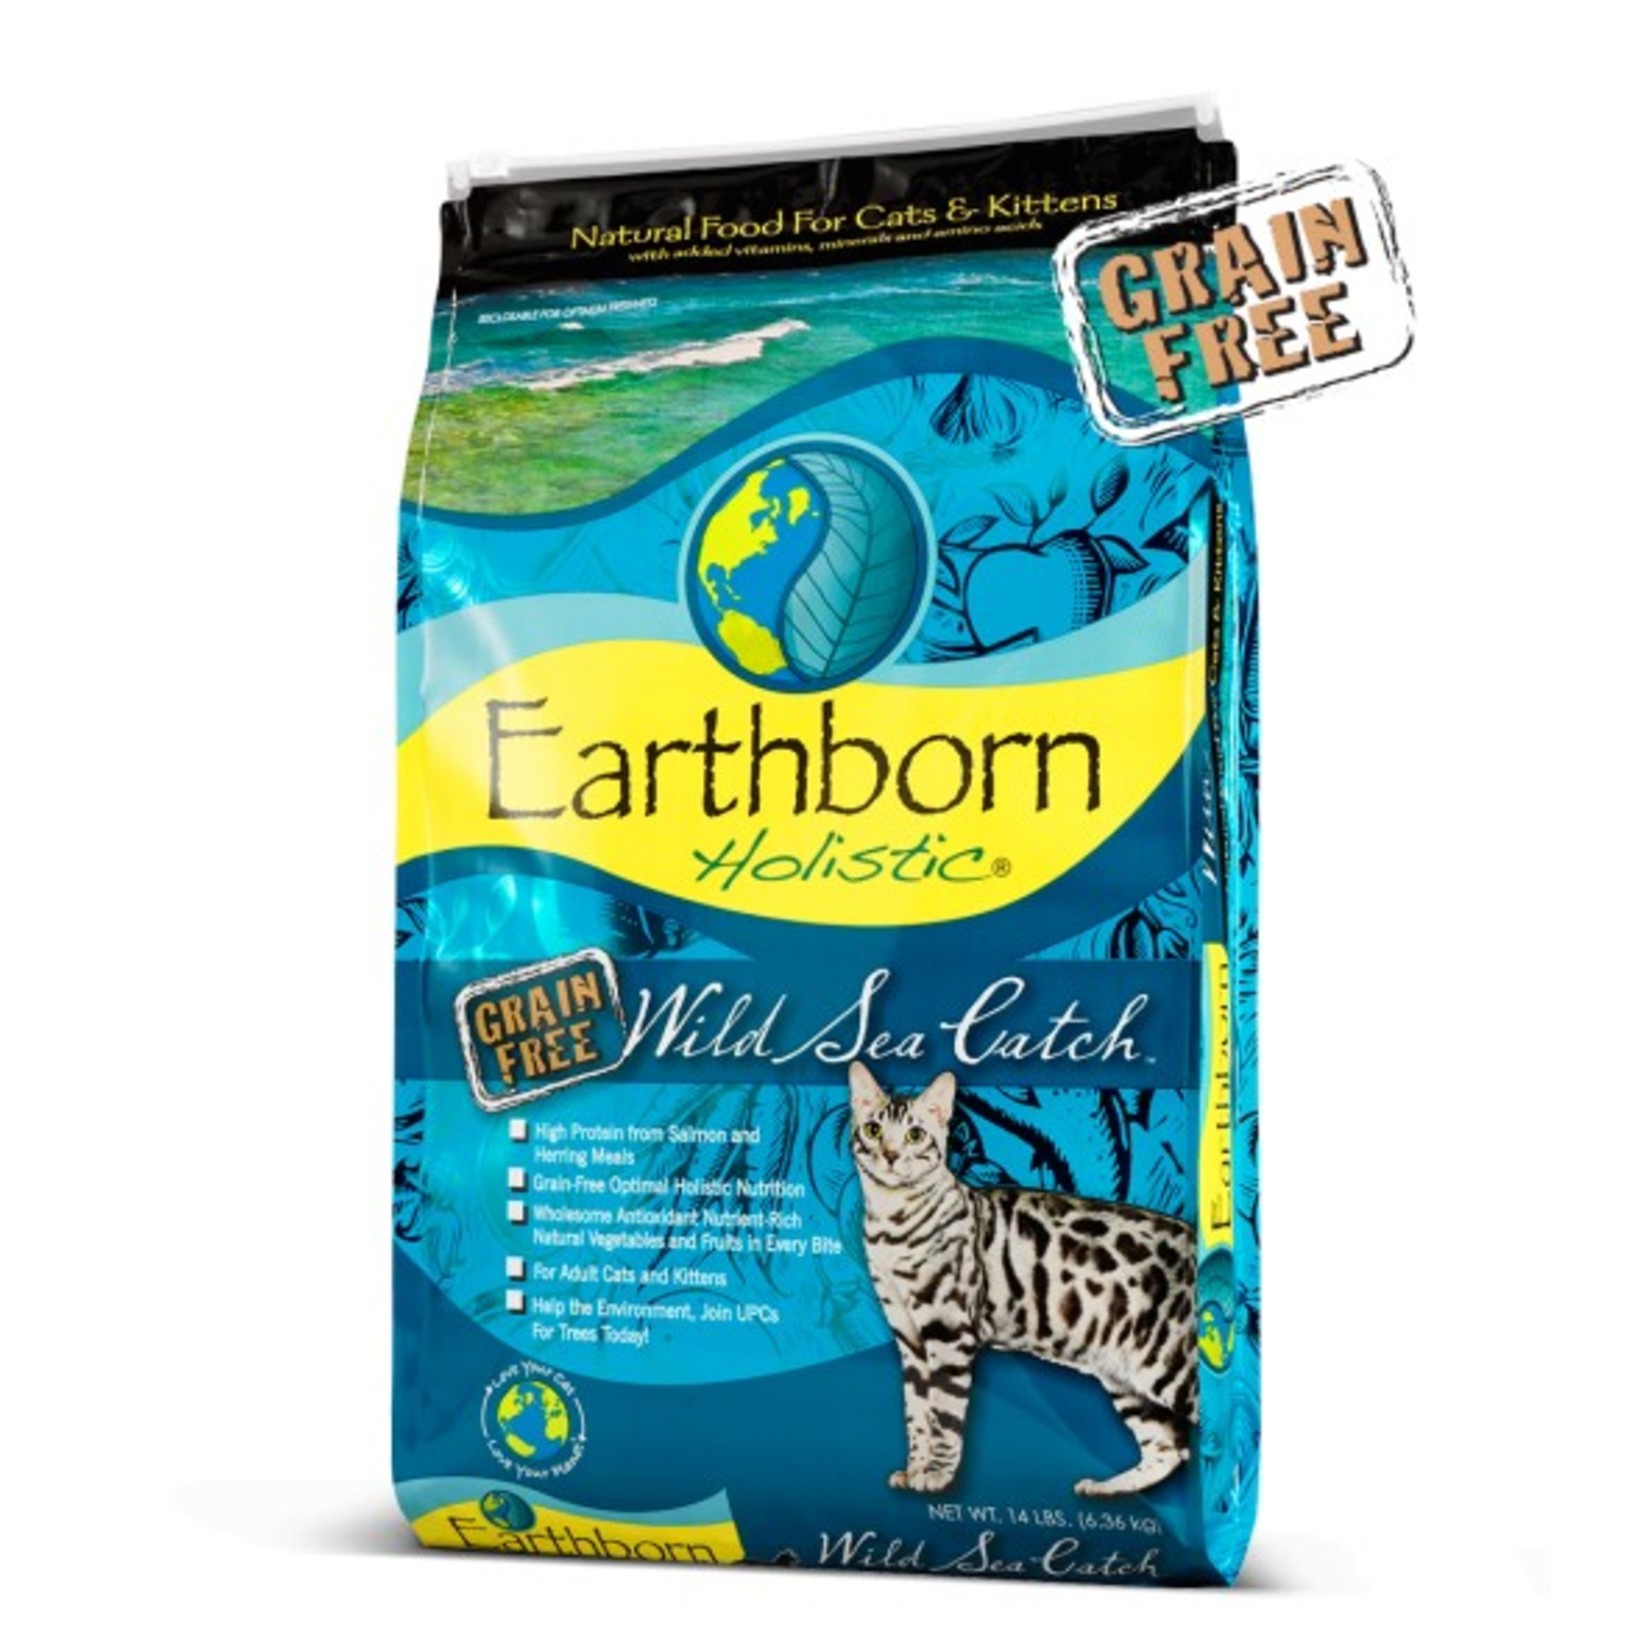 Earthborn Earthborn Wild Sea Catch Cat Food